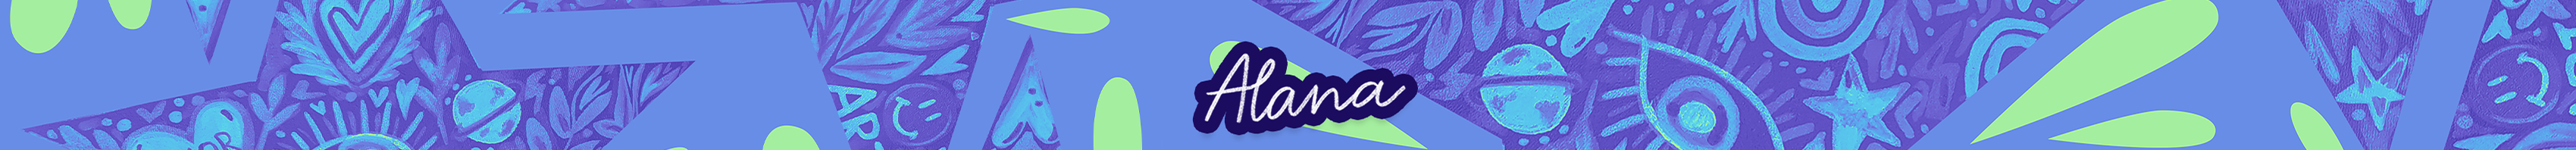 Alana González Allende's profile banner